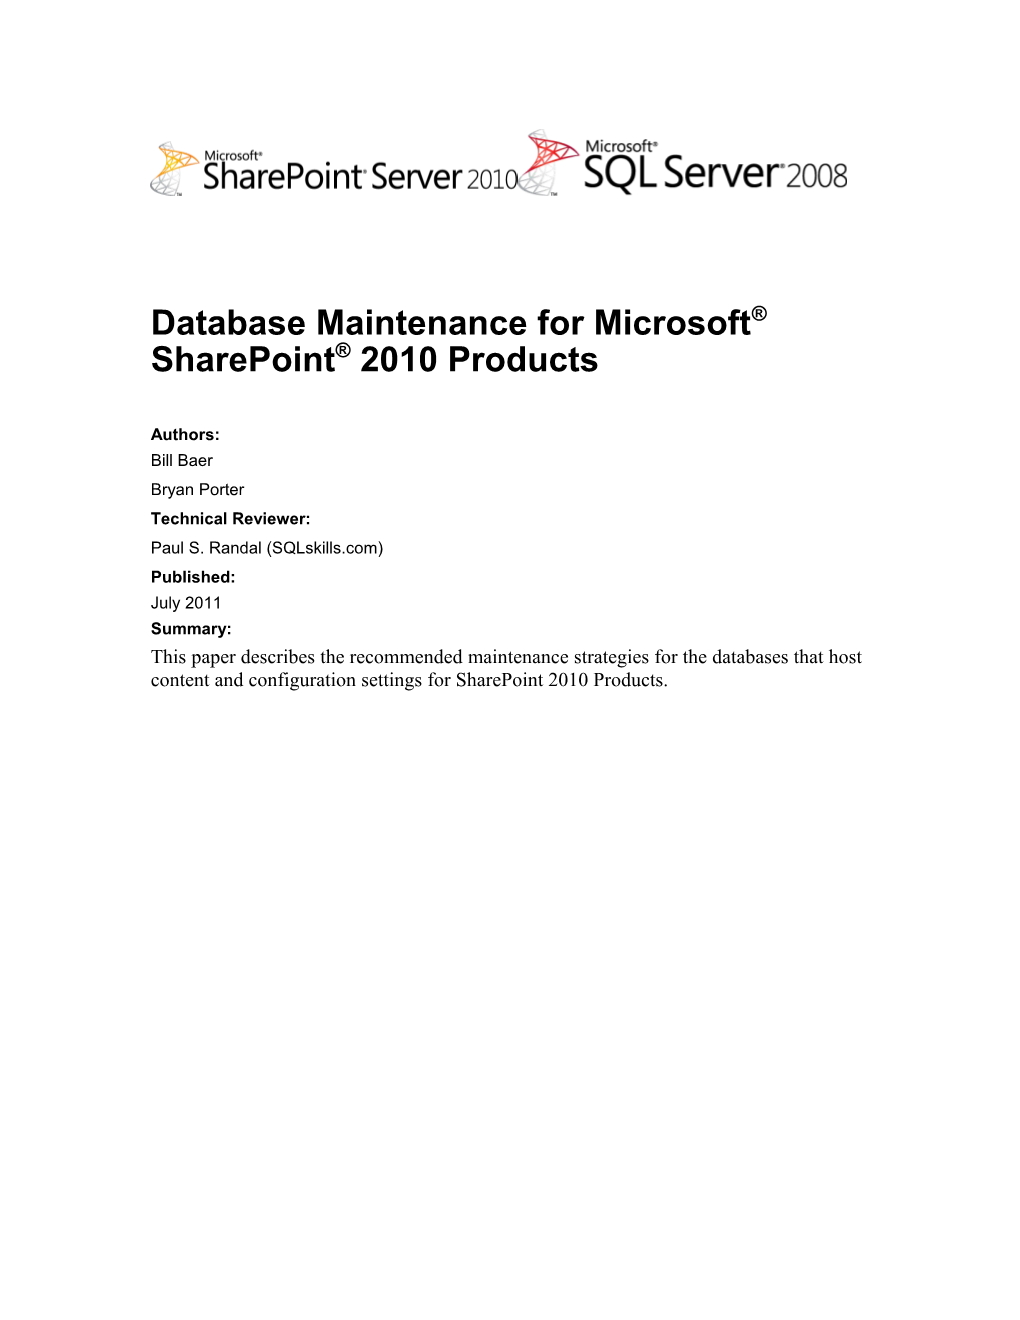 Database Maintenance for Microsoft Sharepoint 2010 Products